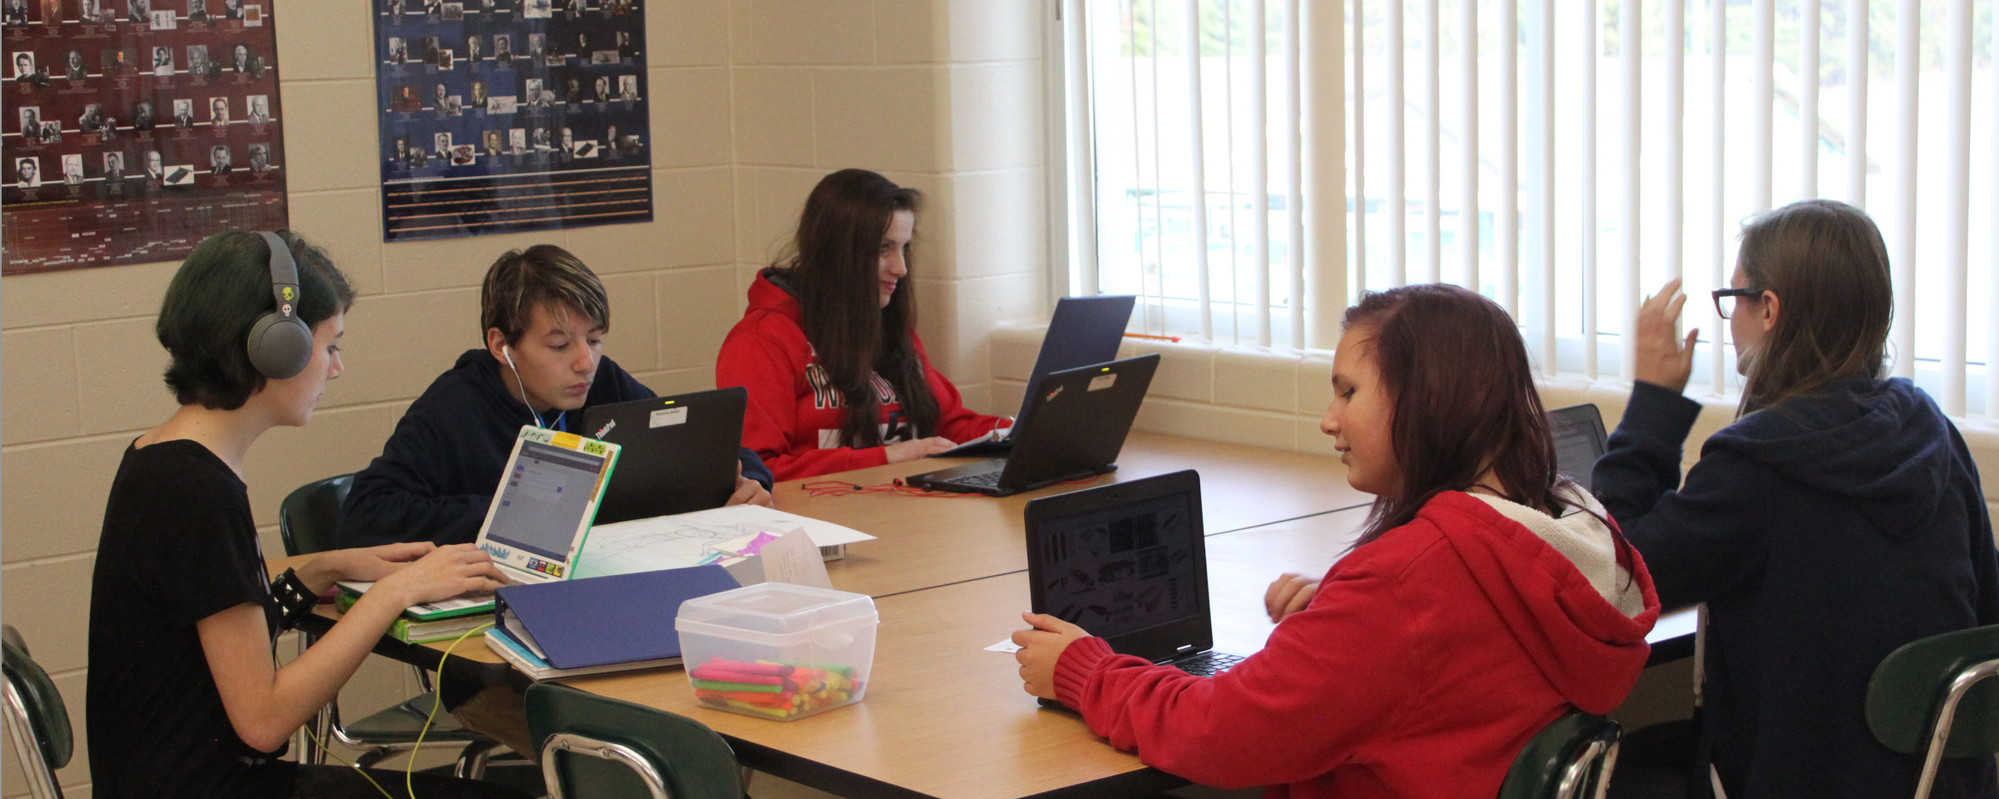 SOAR HS - Students on laptops in classroom